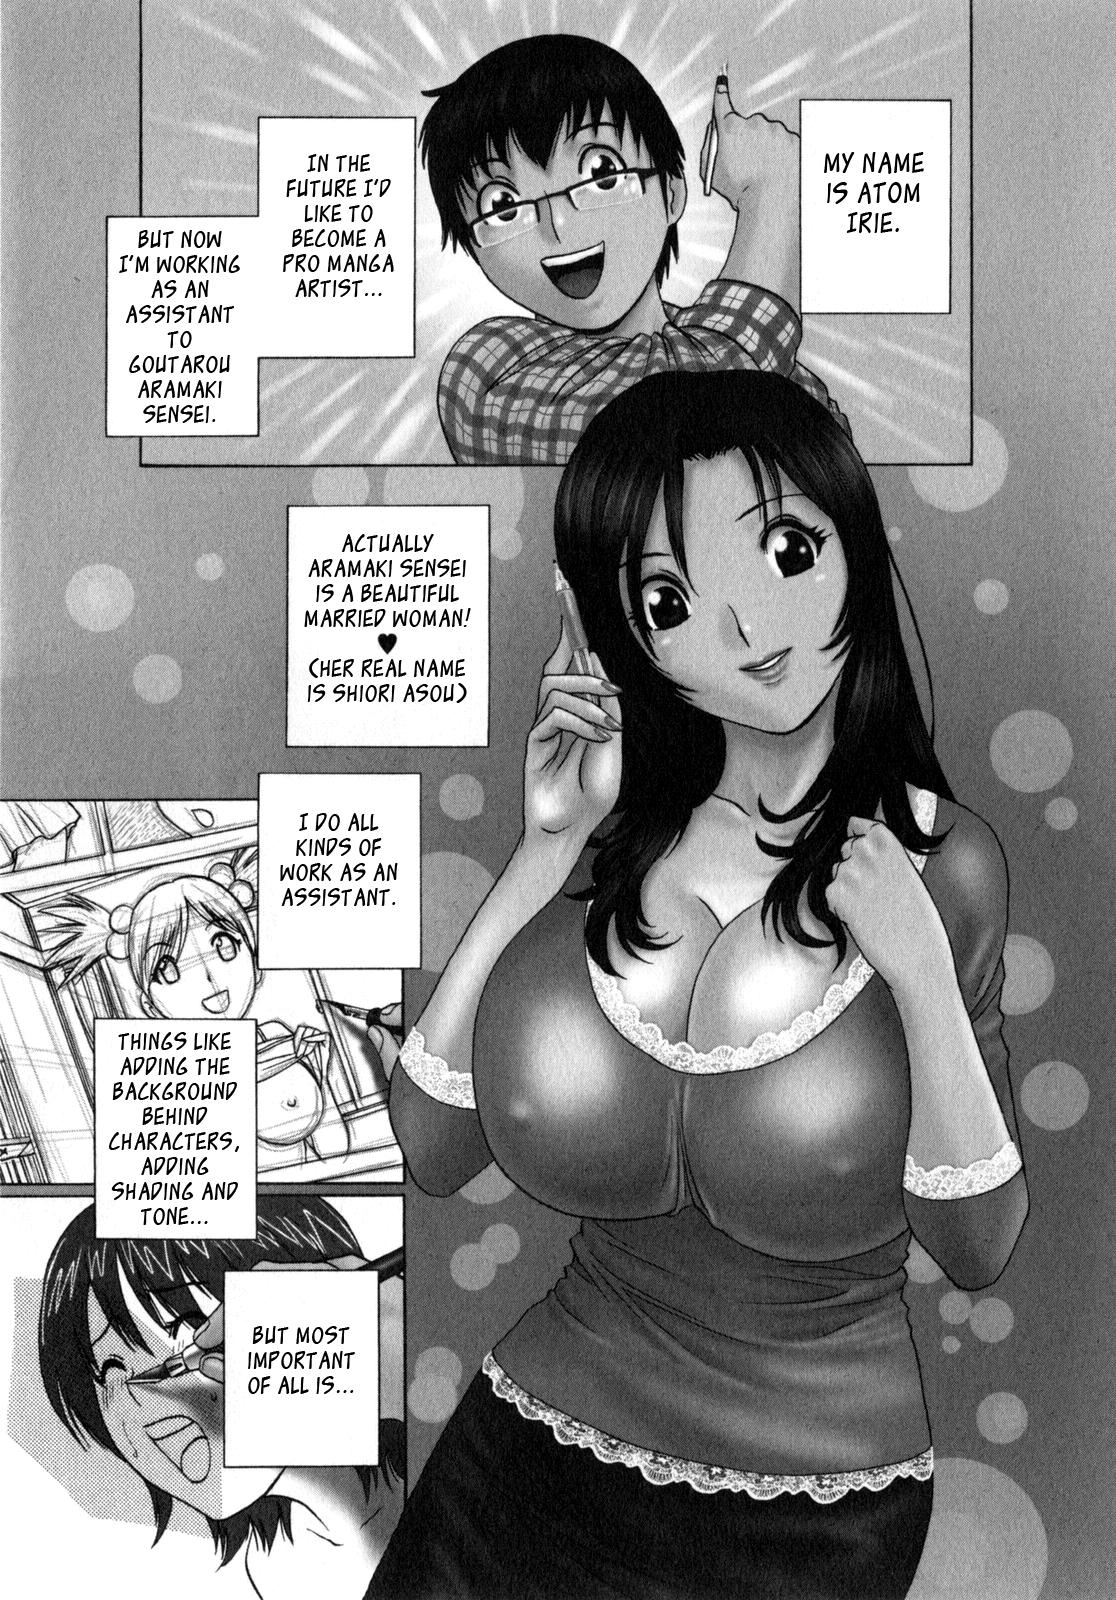 [Hidemaru] Life with Married Women Just Like a Manga 1 - Ch. 1-9 [English] {Tadanohito} 64